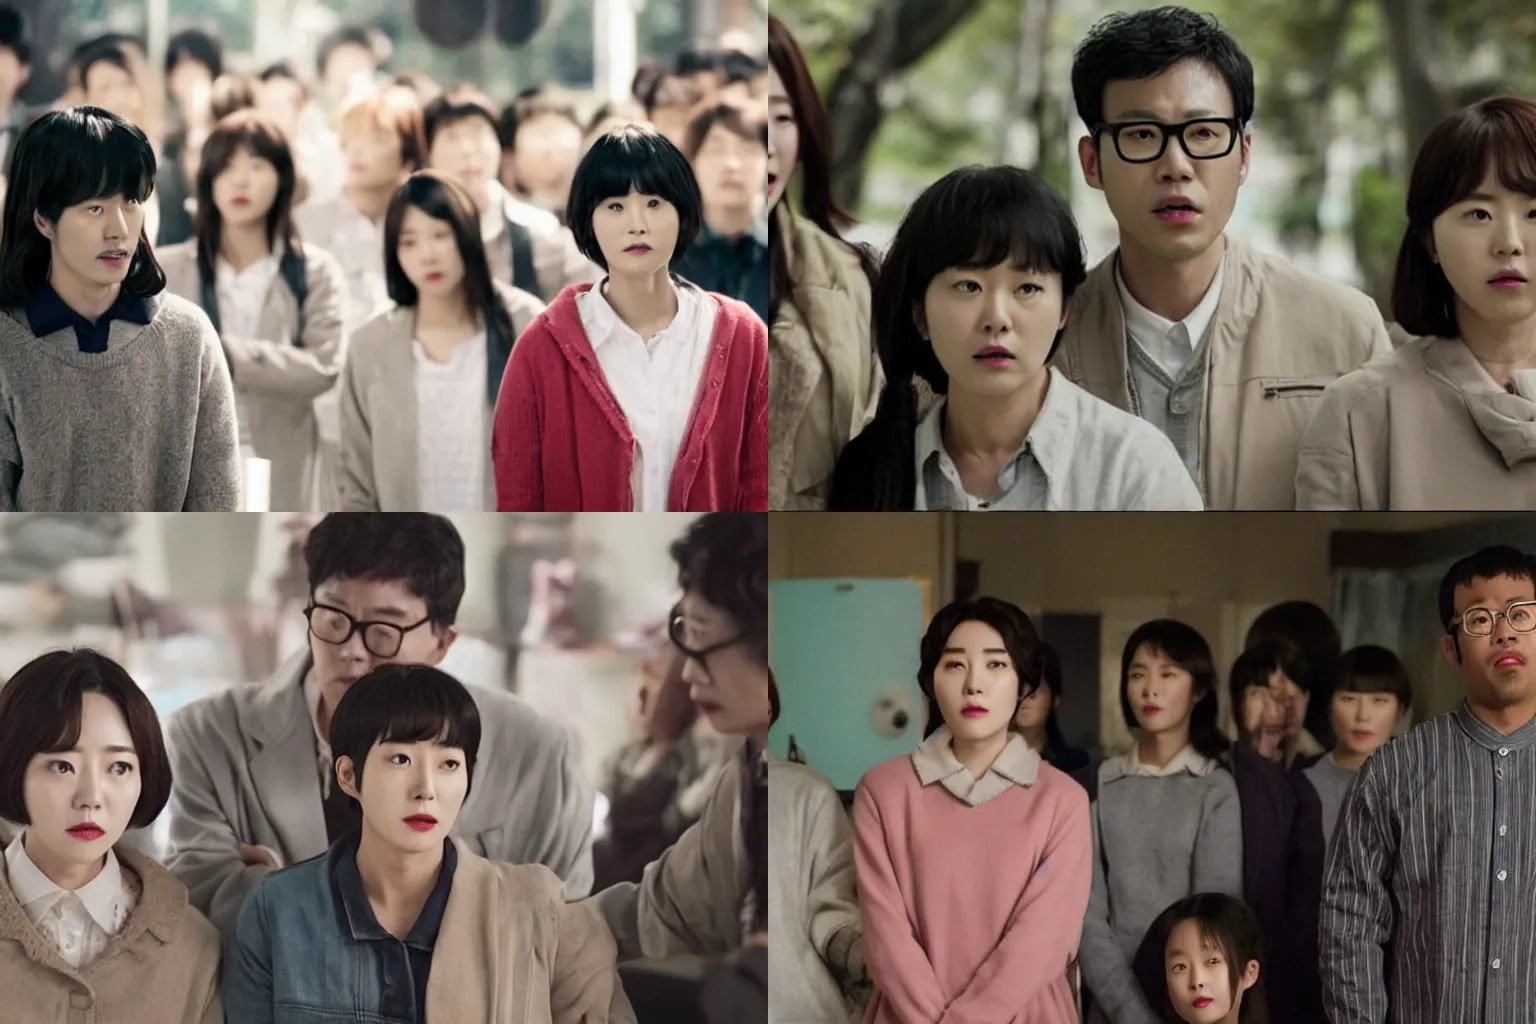 Prompt: korean film still from korean adaptation of jordan peele's get out